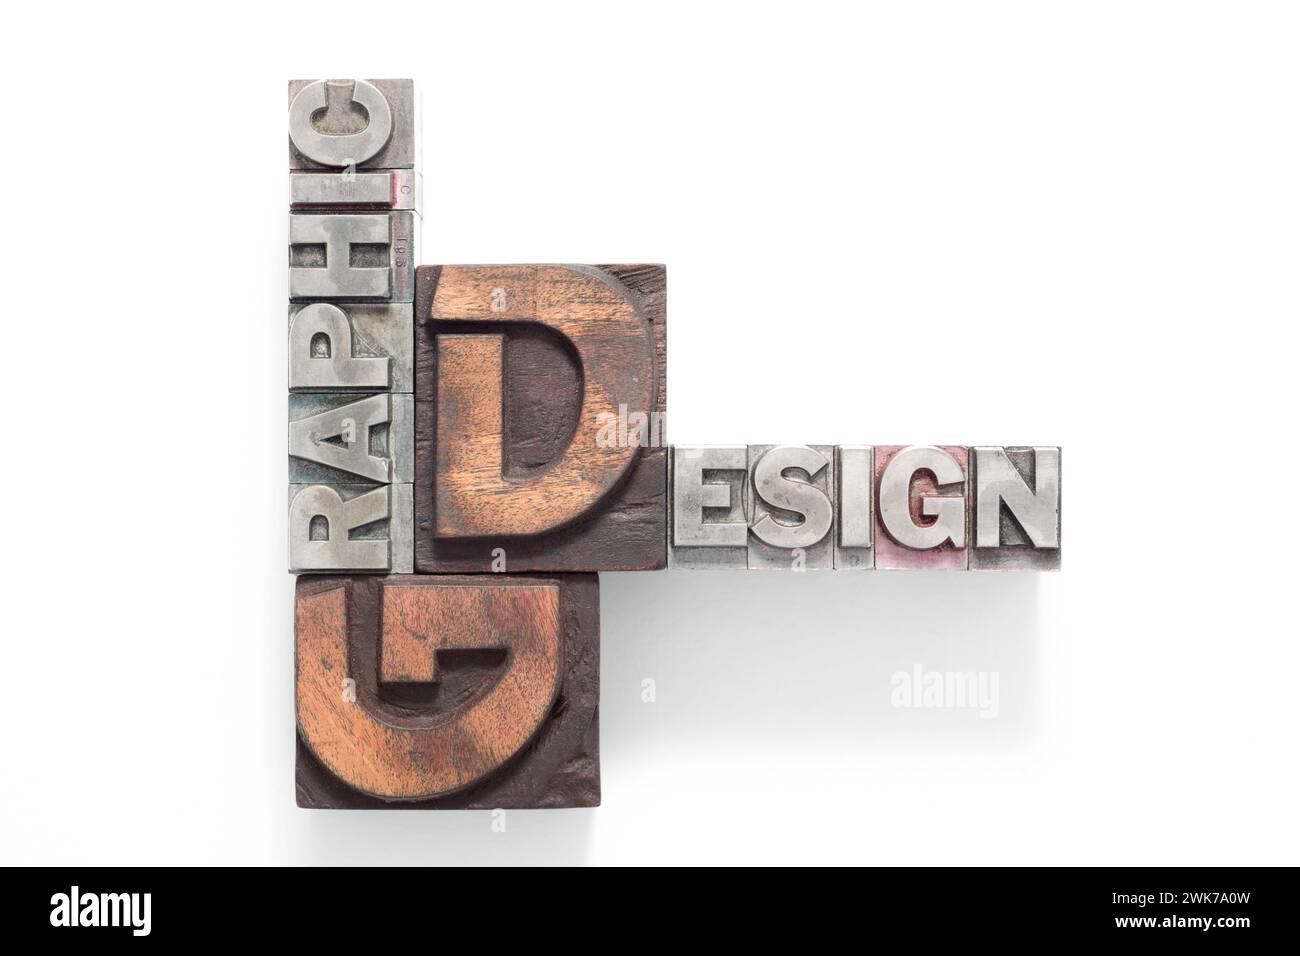 Graphic Design logo made from vintage letterpress blocks Stock Photo